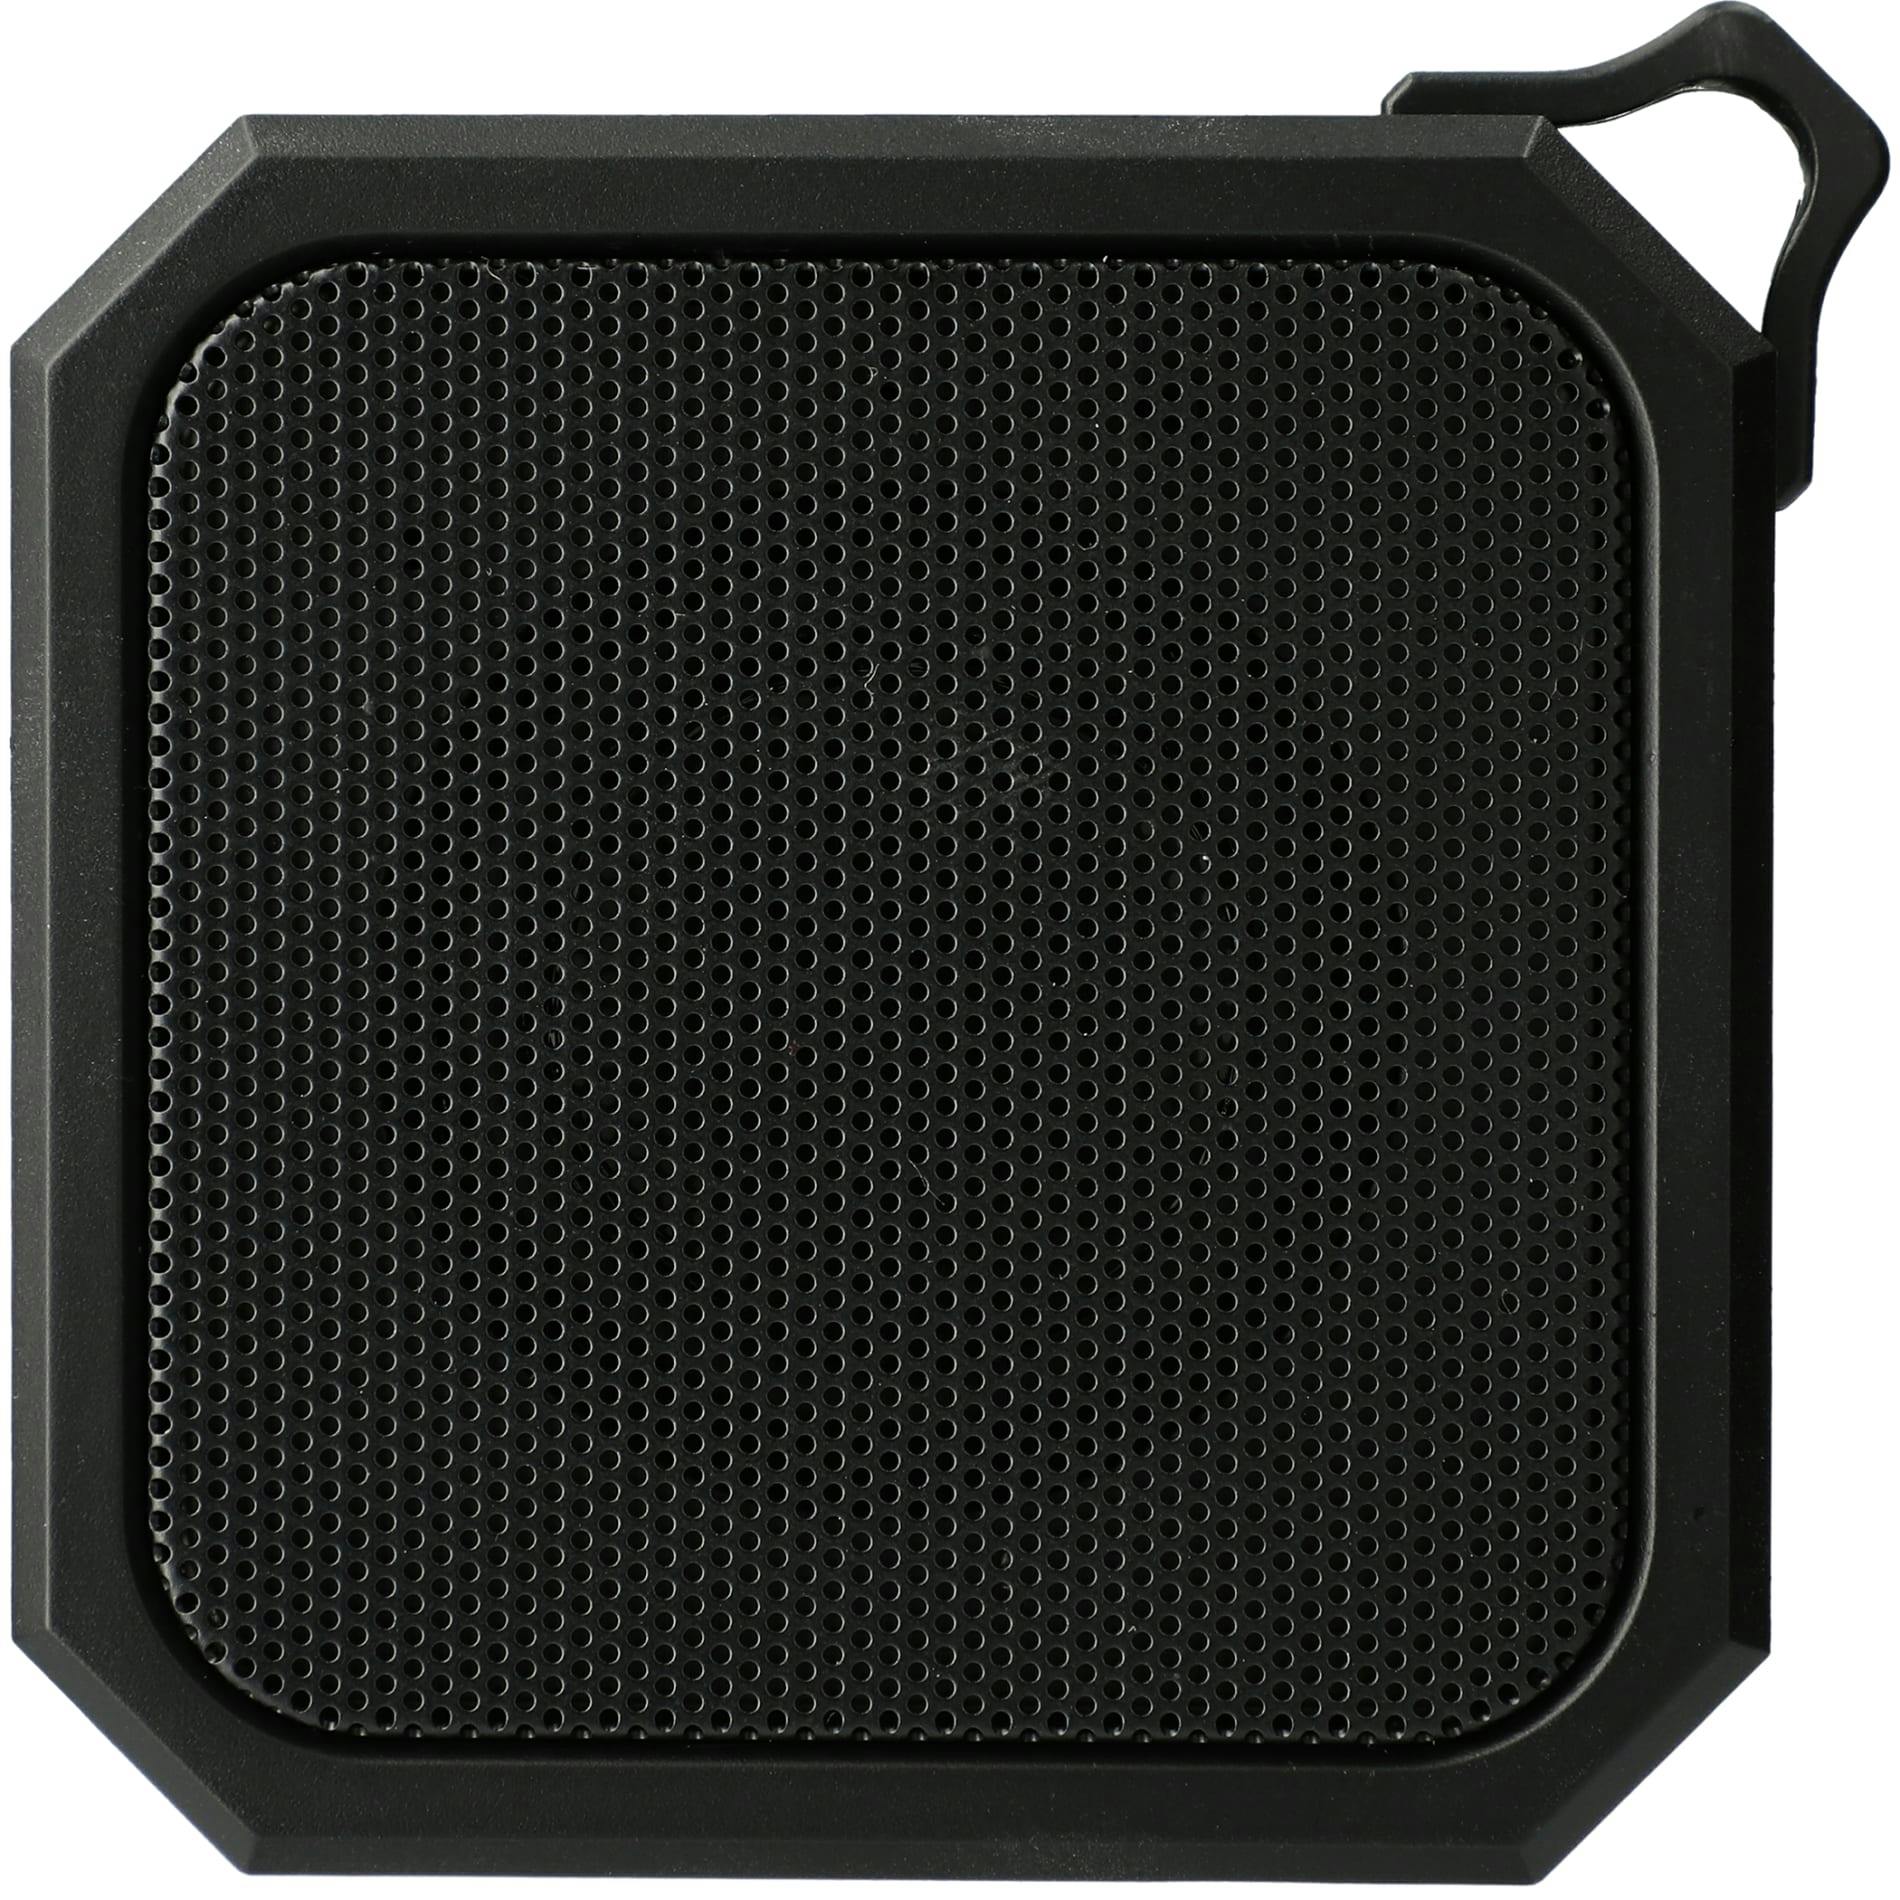 Blackwater Outdoor Waterproof  Bluetooth Speaker - additional Image 1